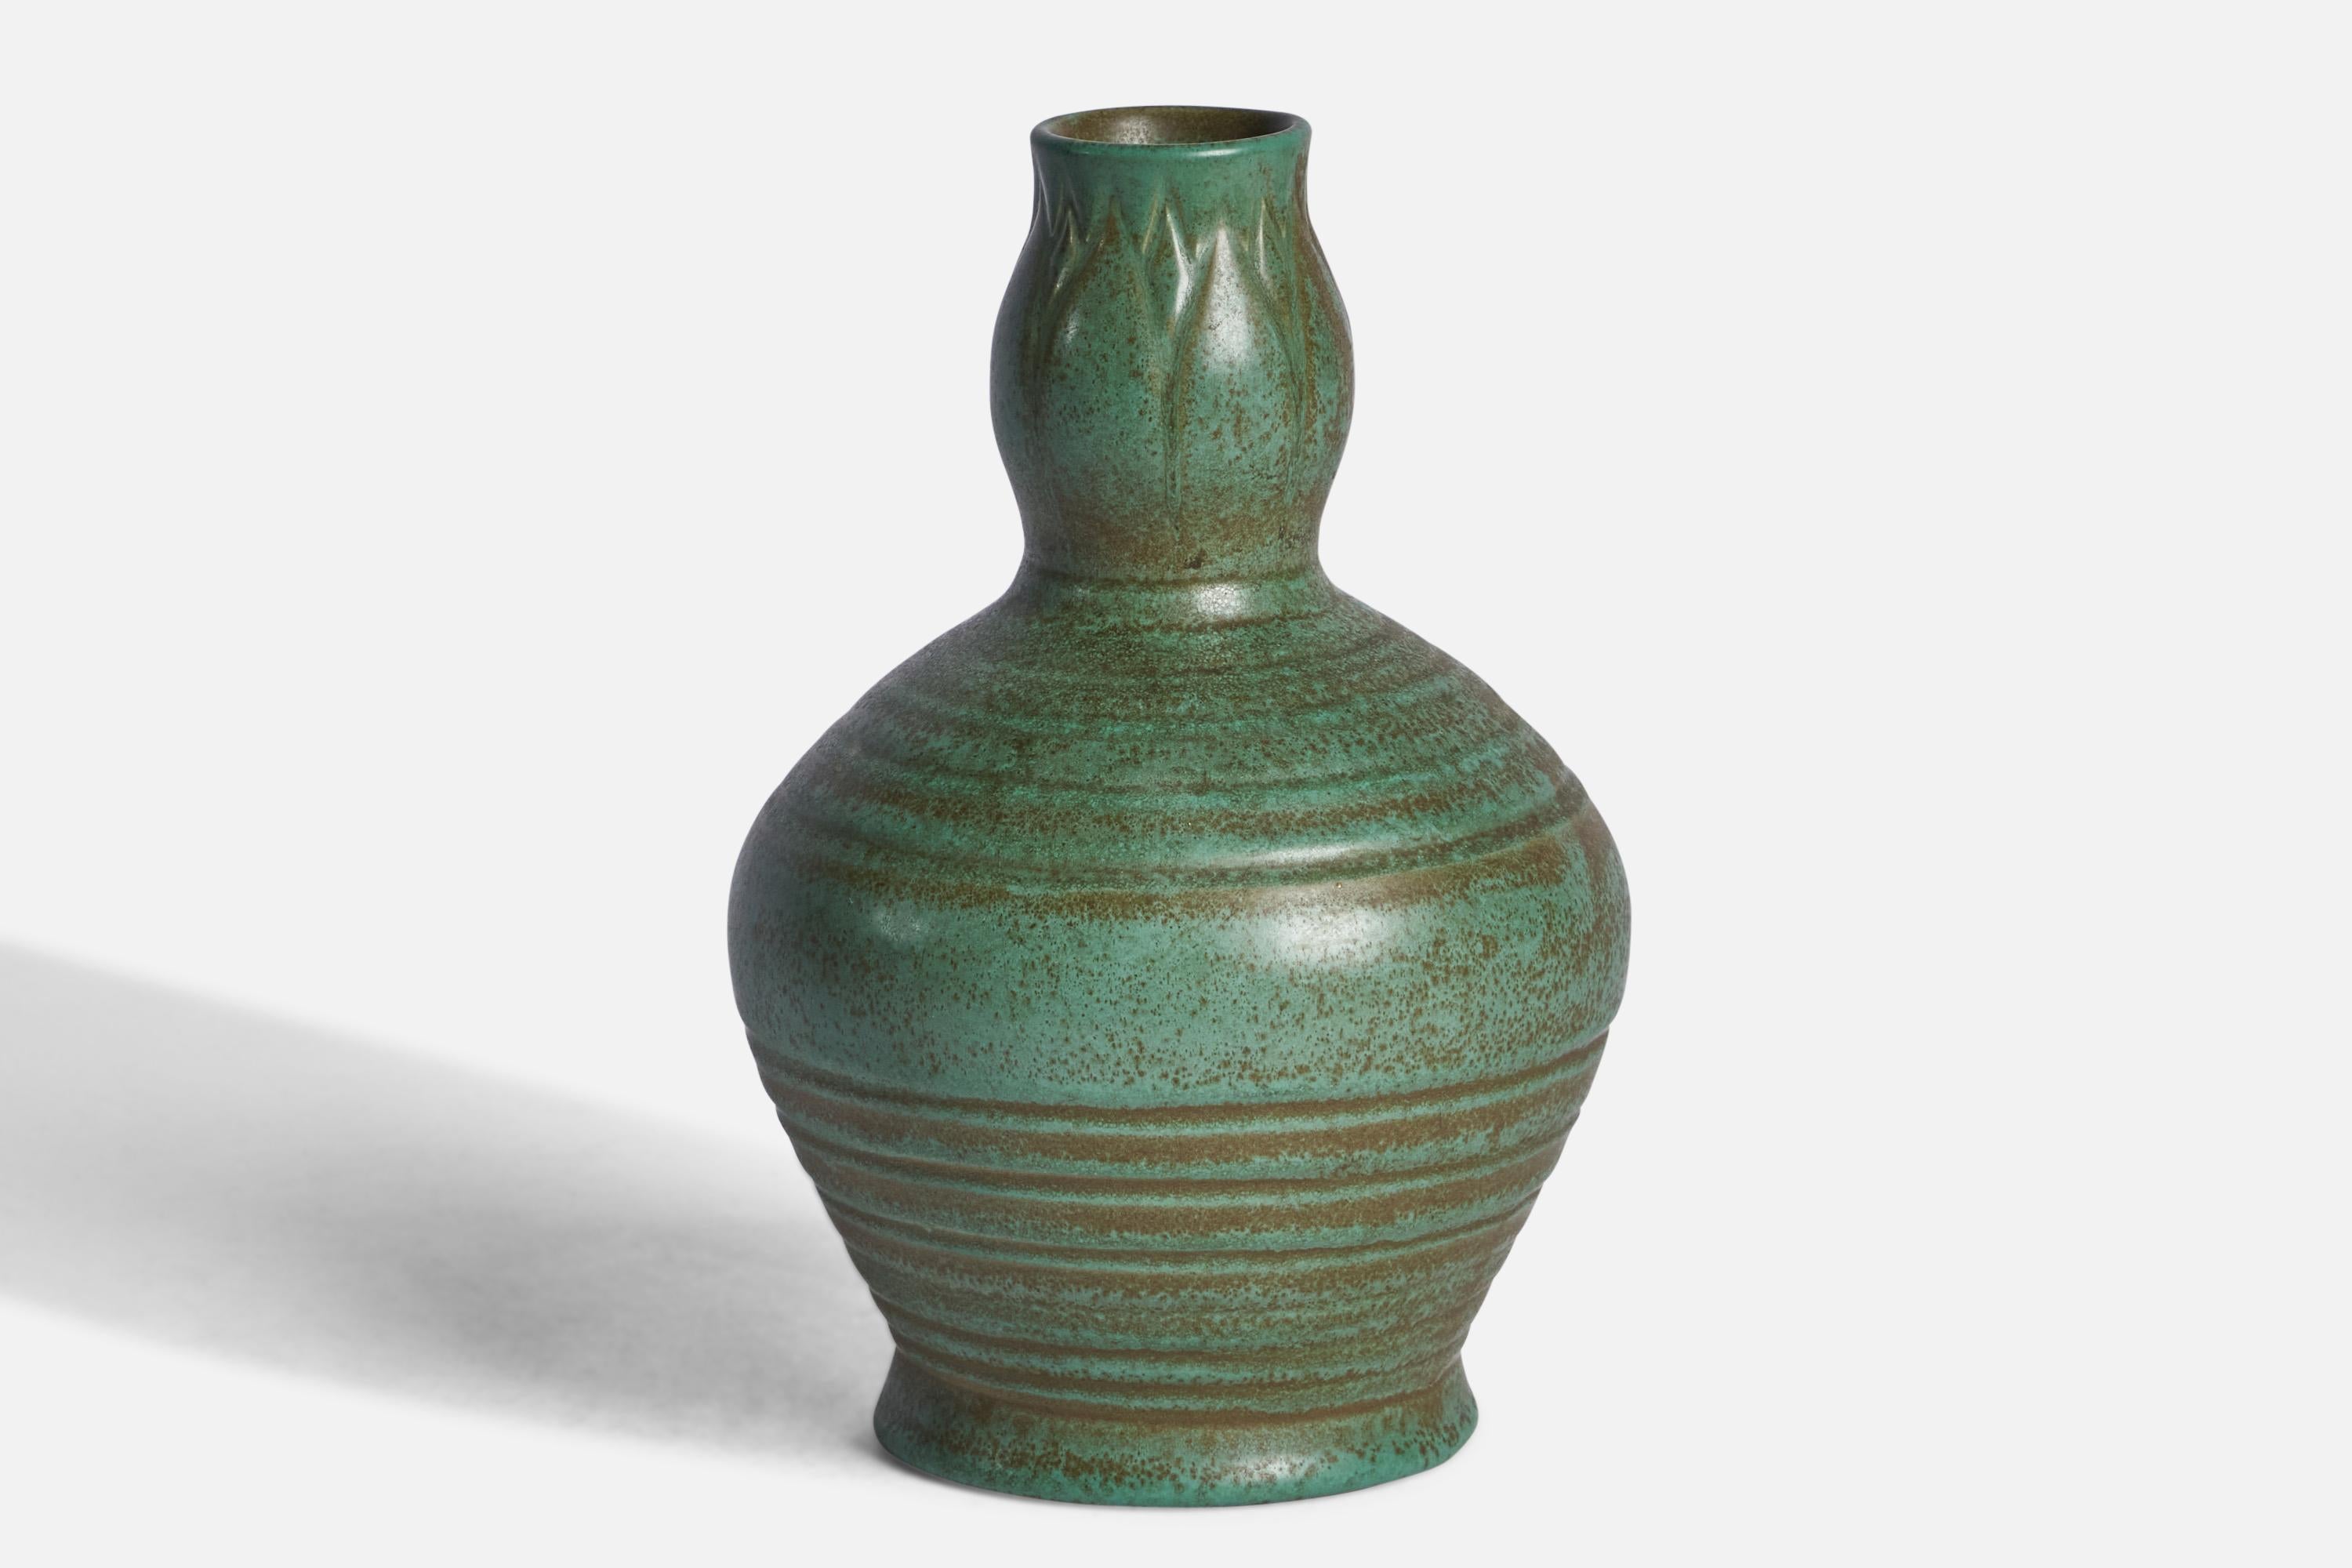 A green-glazed incised earthenware vase designed by Ewald Dahlskog and produced by Bo Fajans, Sweden, c. 1930s.